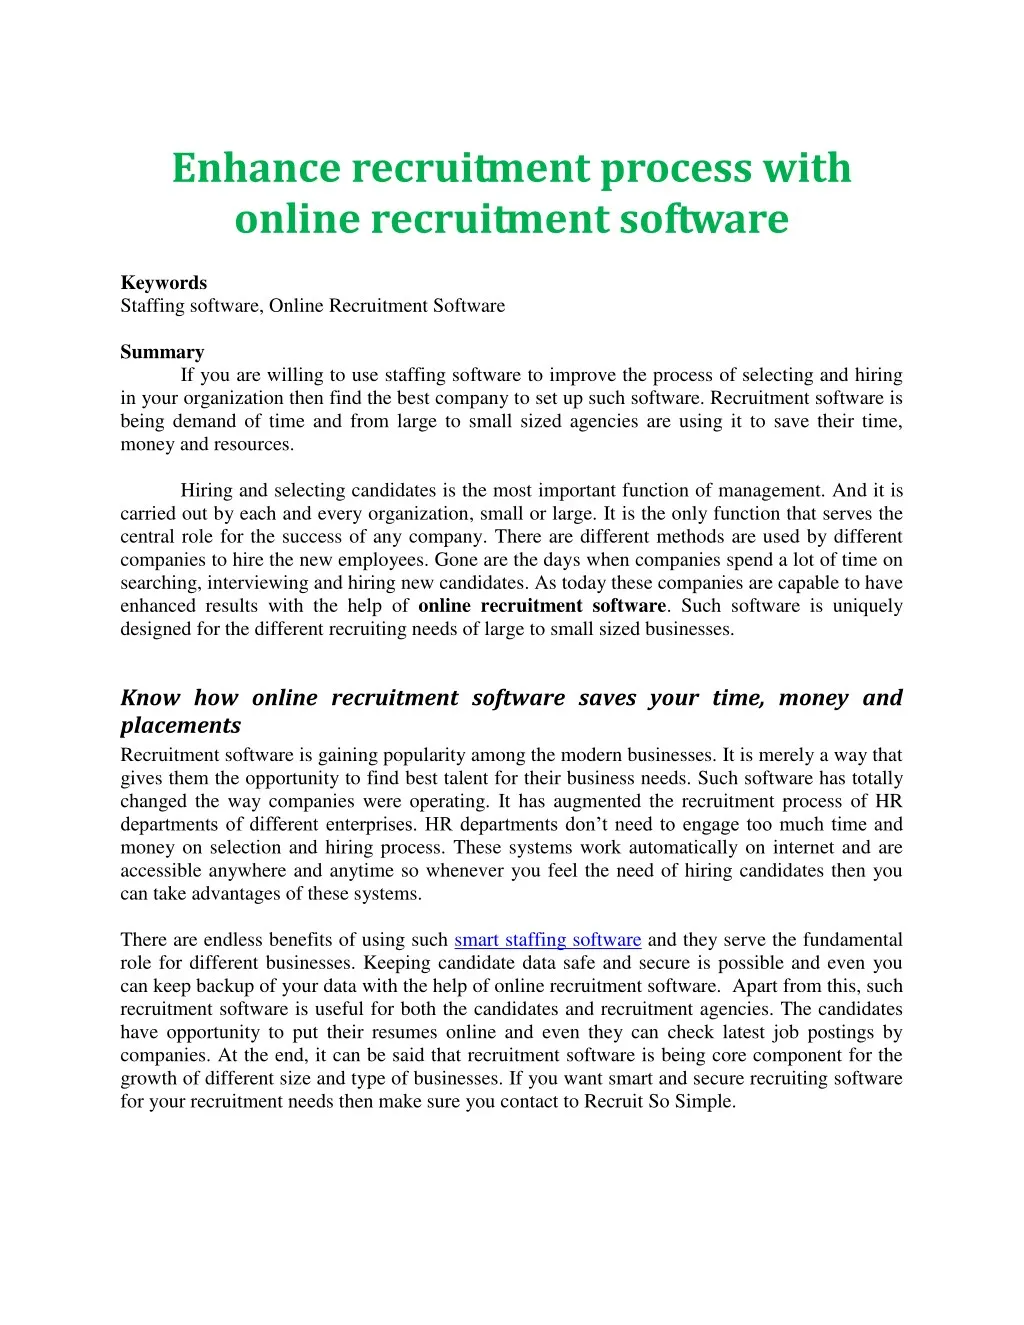 enhance recruitment process with online